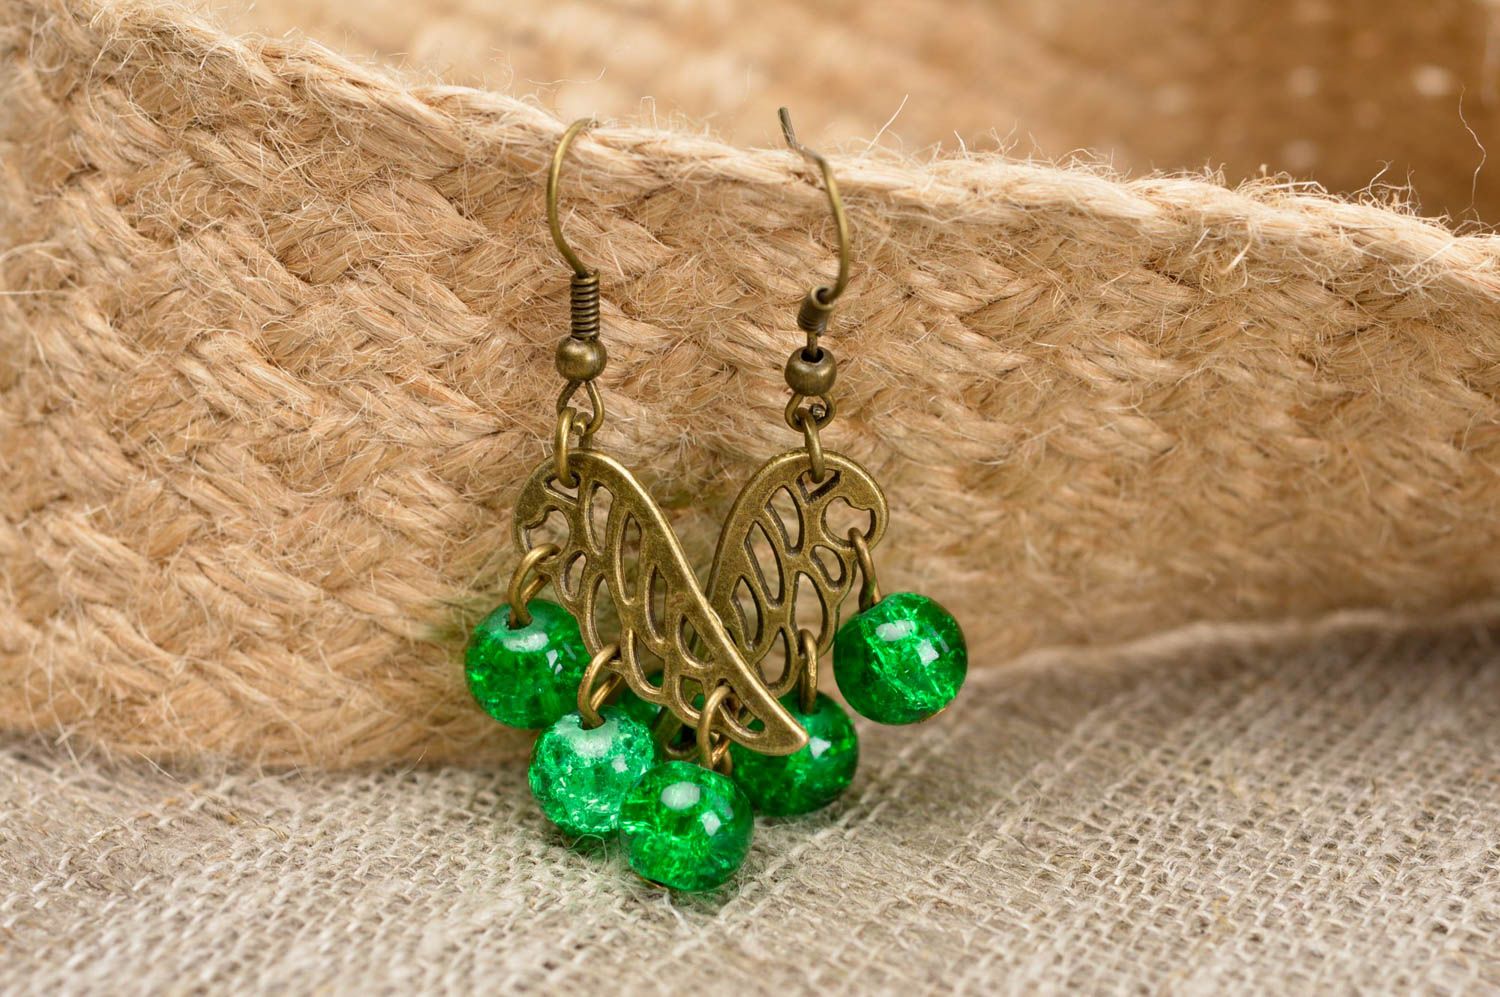 Handmade earrings designer accessory gift ideas unusual earrings beads jewelry photo 1